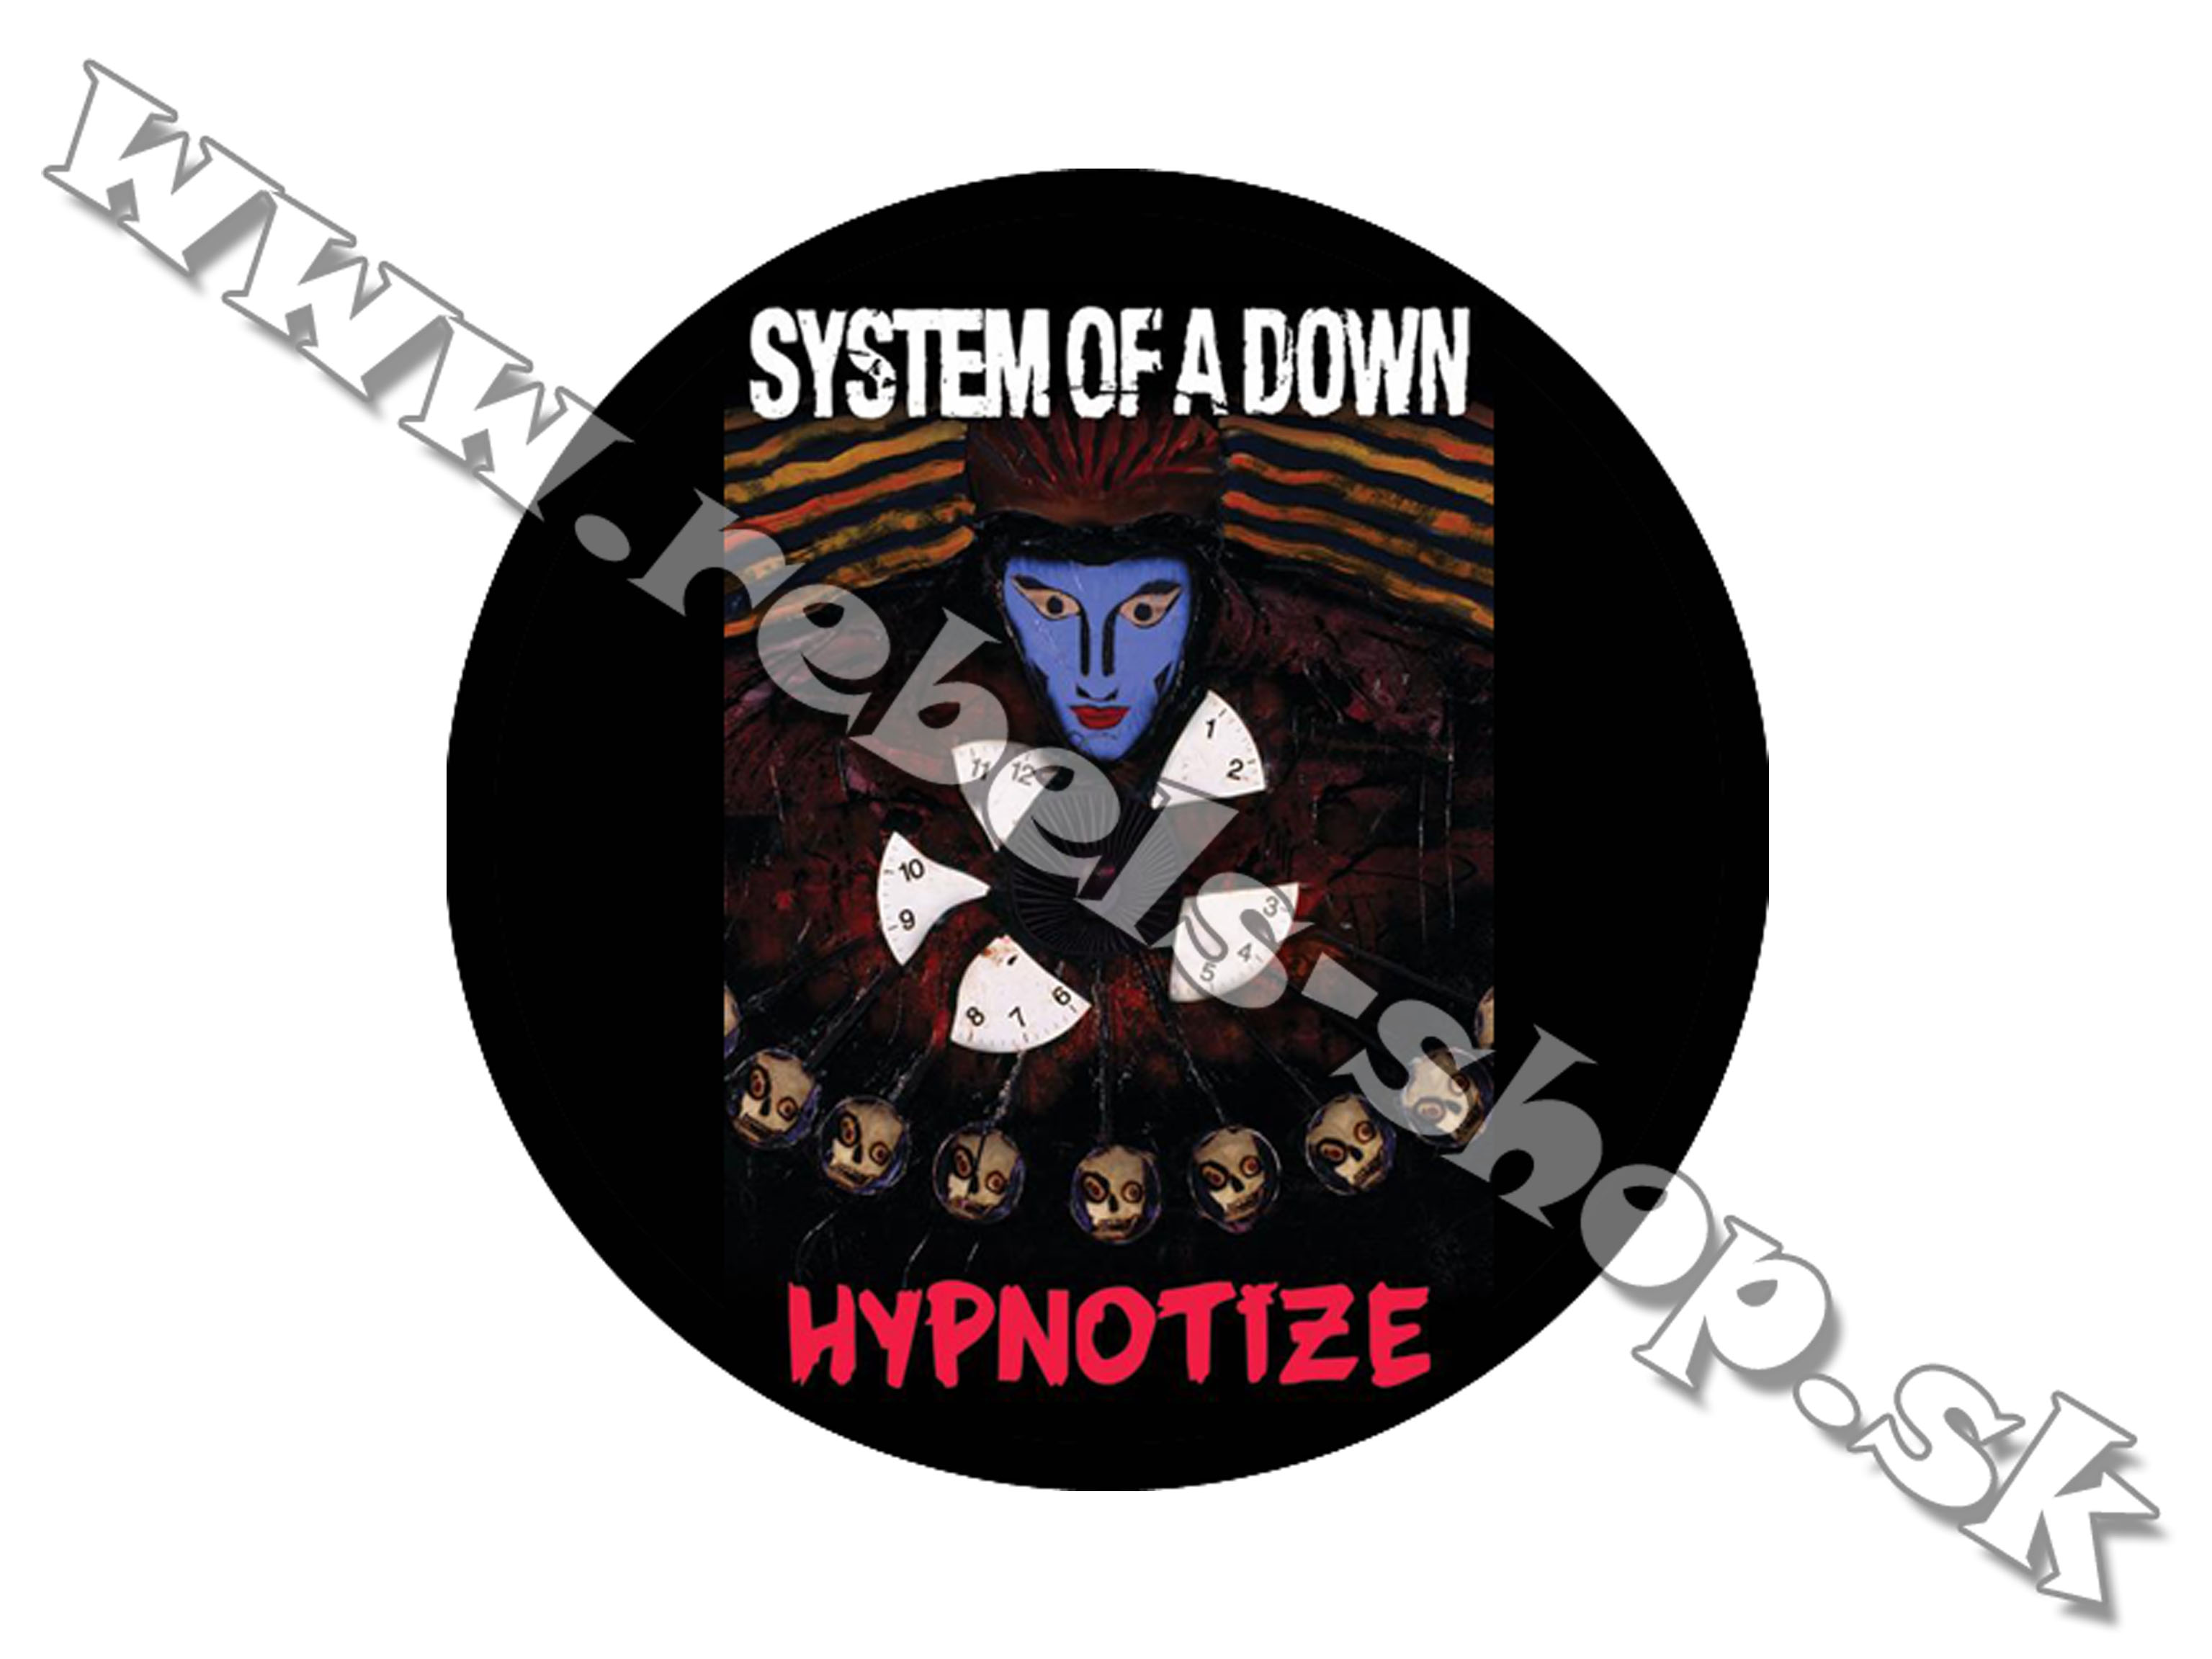 Odznak "System of a Down"